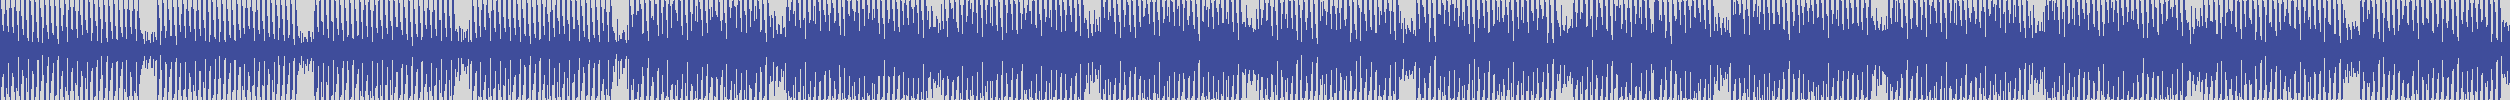 nf_boyz_records [NFY019] 4 Synth - Hi Buzz! [Scary Mix] audio wave form